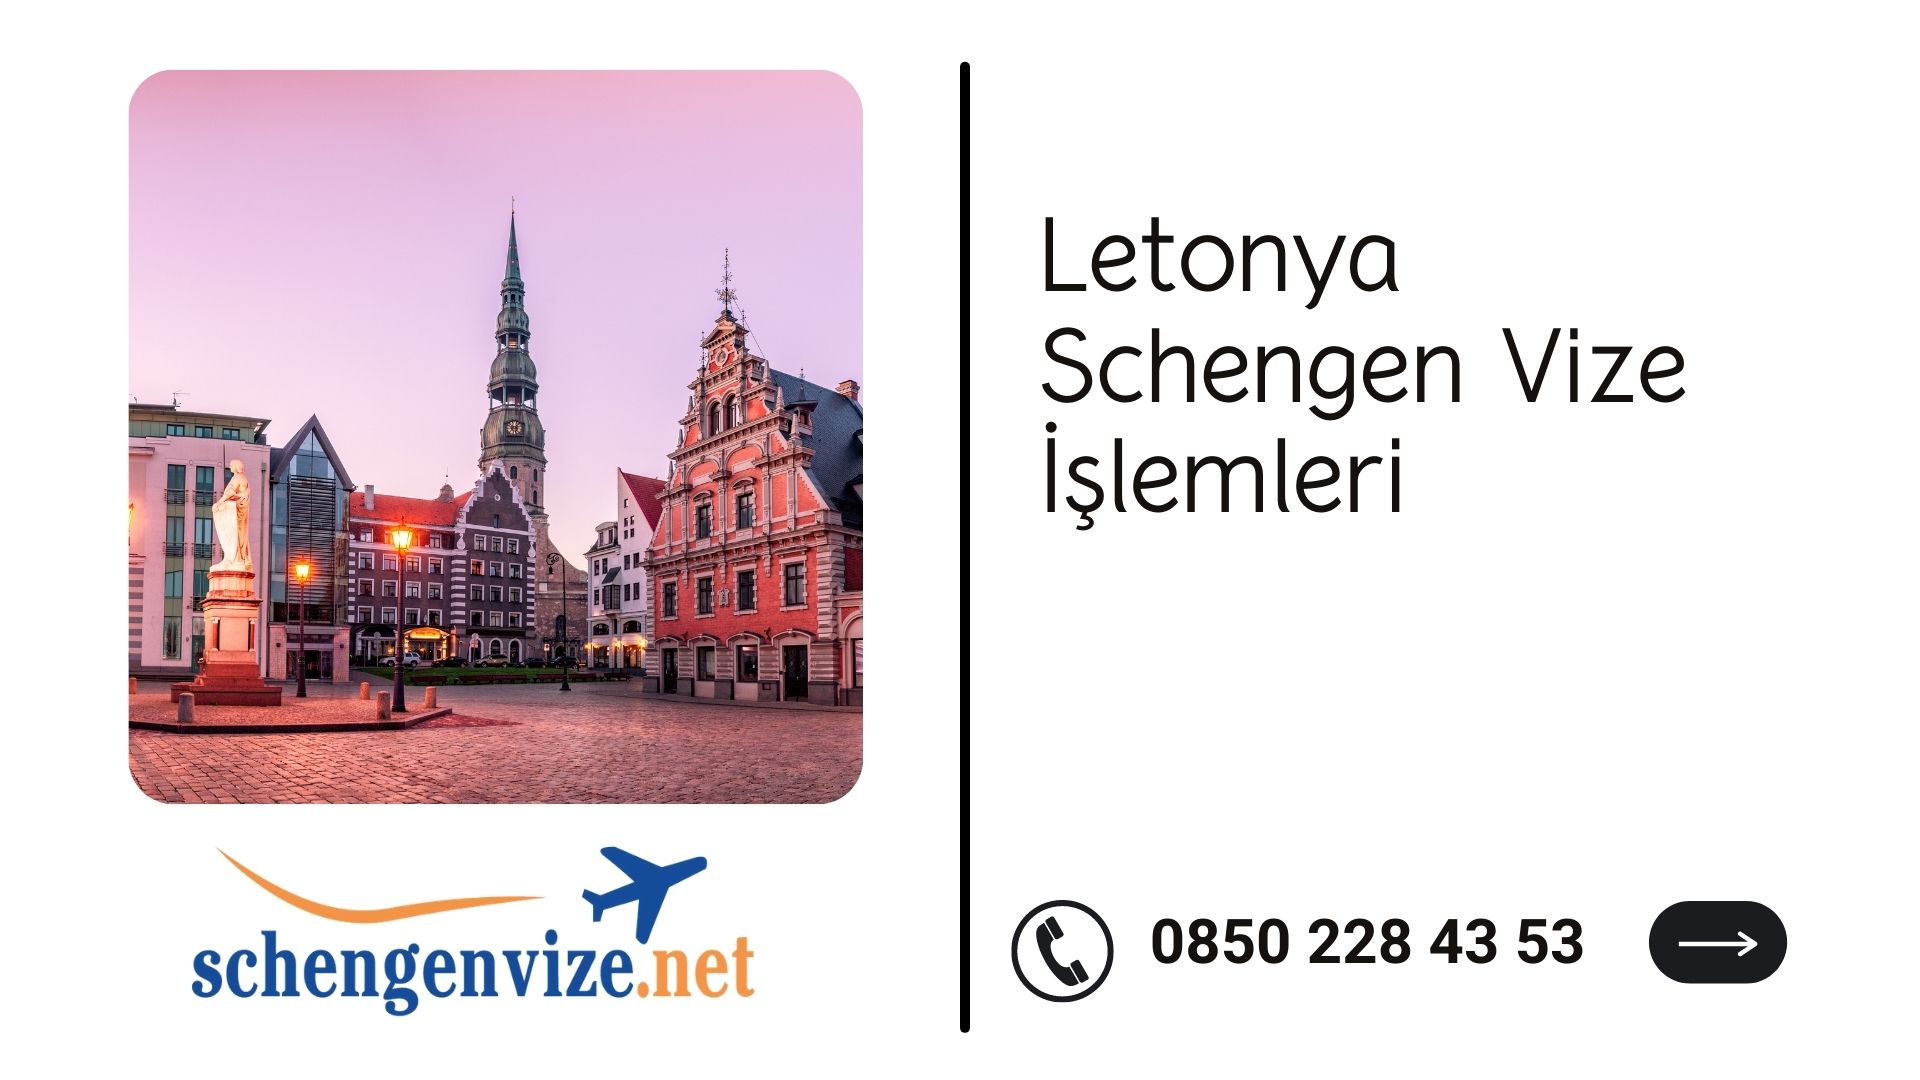 Letonya Schengen Vize İşlemleri